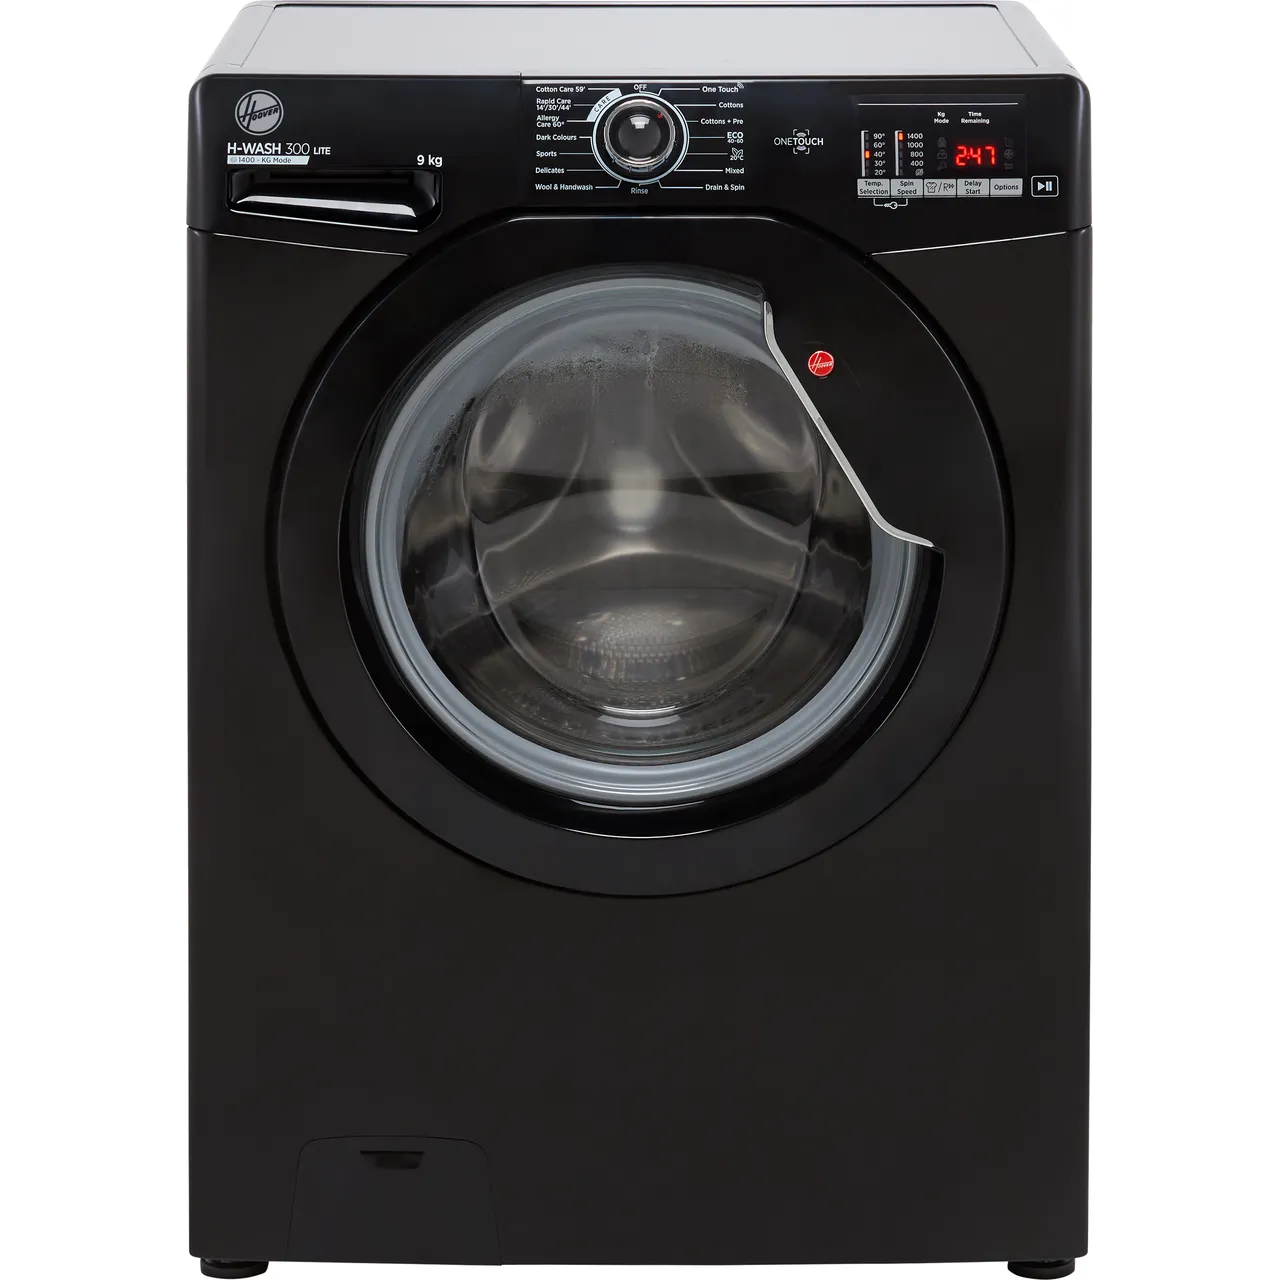 Hoover 9Kg Washing Machine Black